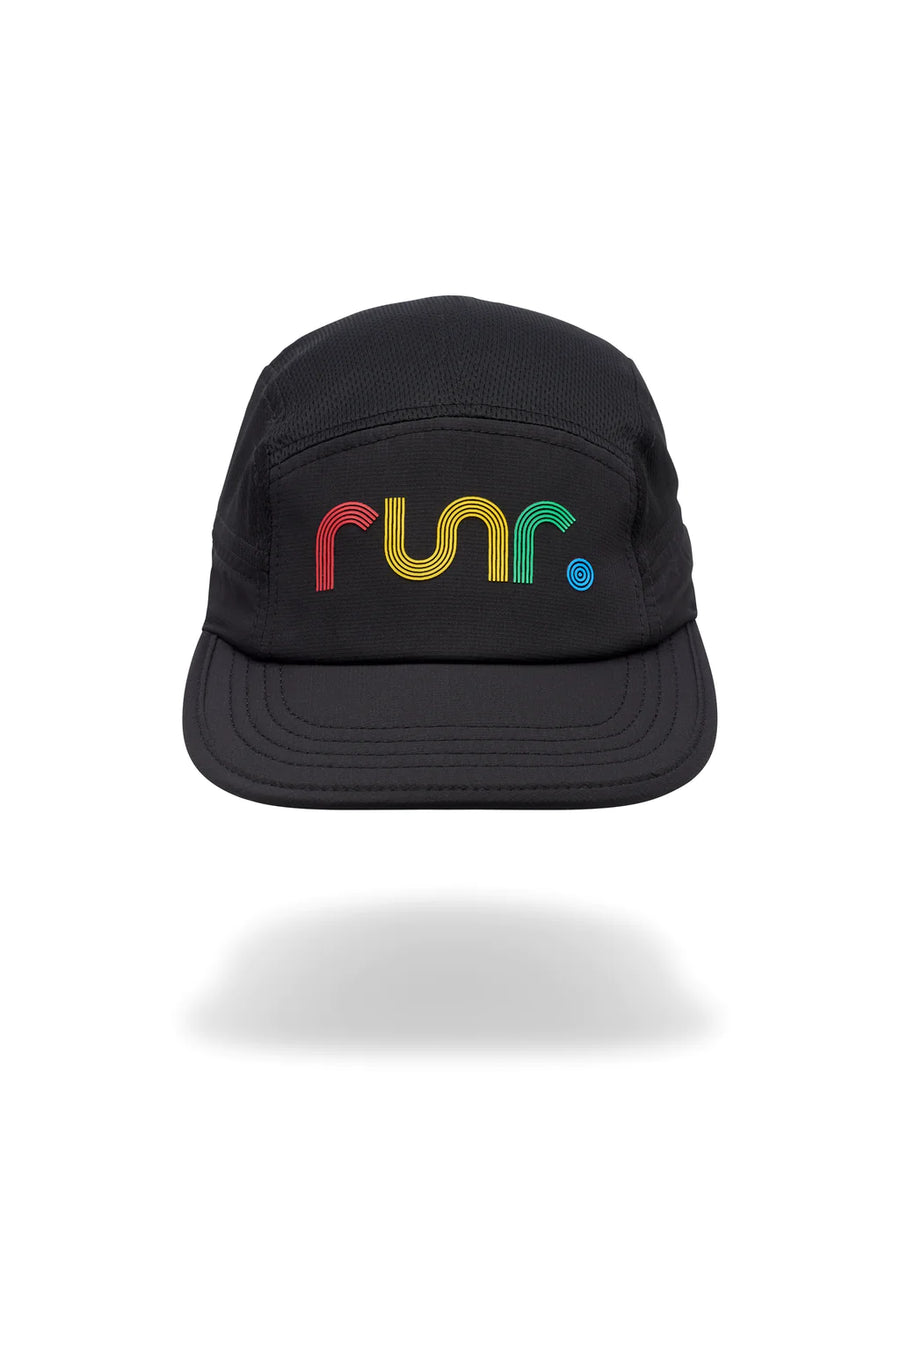 Runr 80's Technical Running Hat